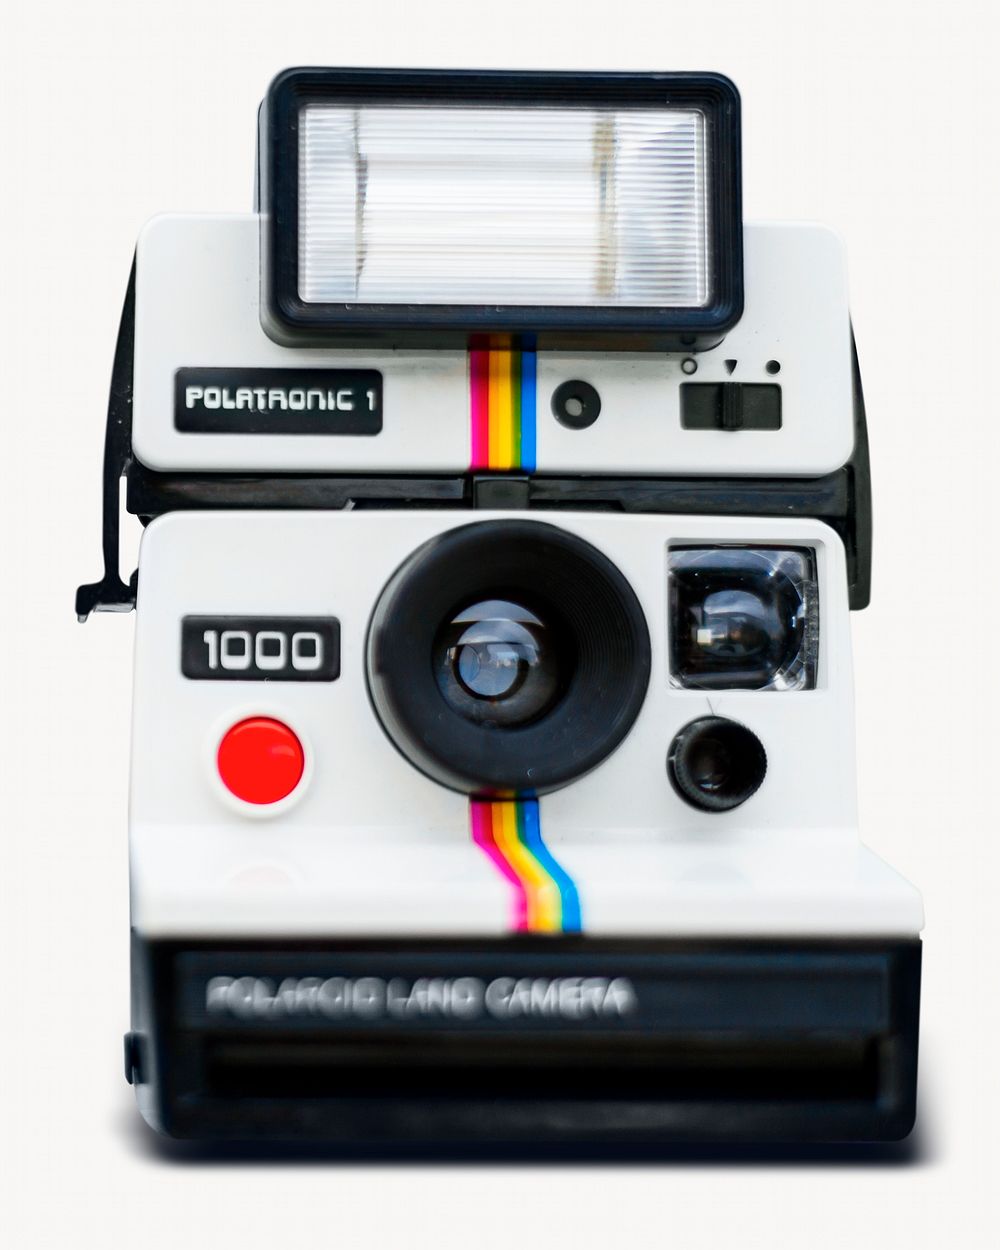 Polaroid land camera 1000. 22 AUGUST 2022 - BANGKOK, THAILAND